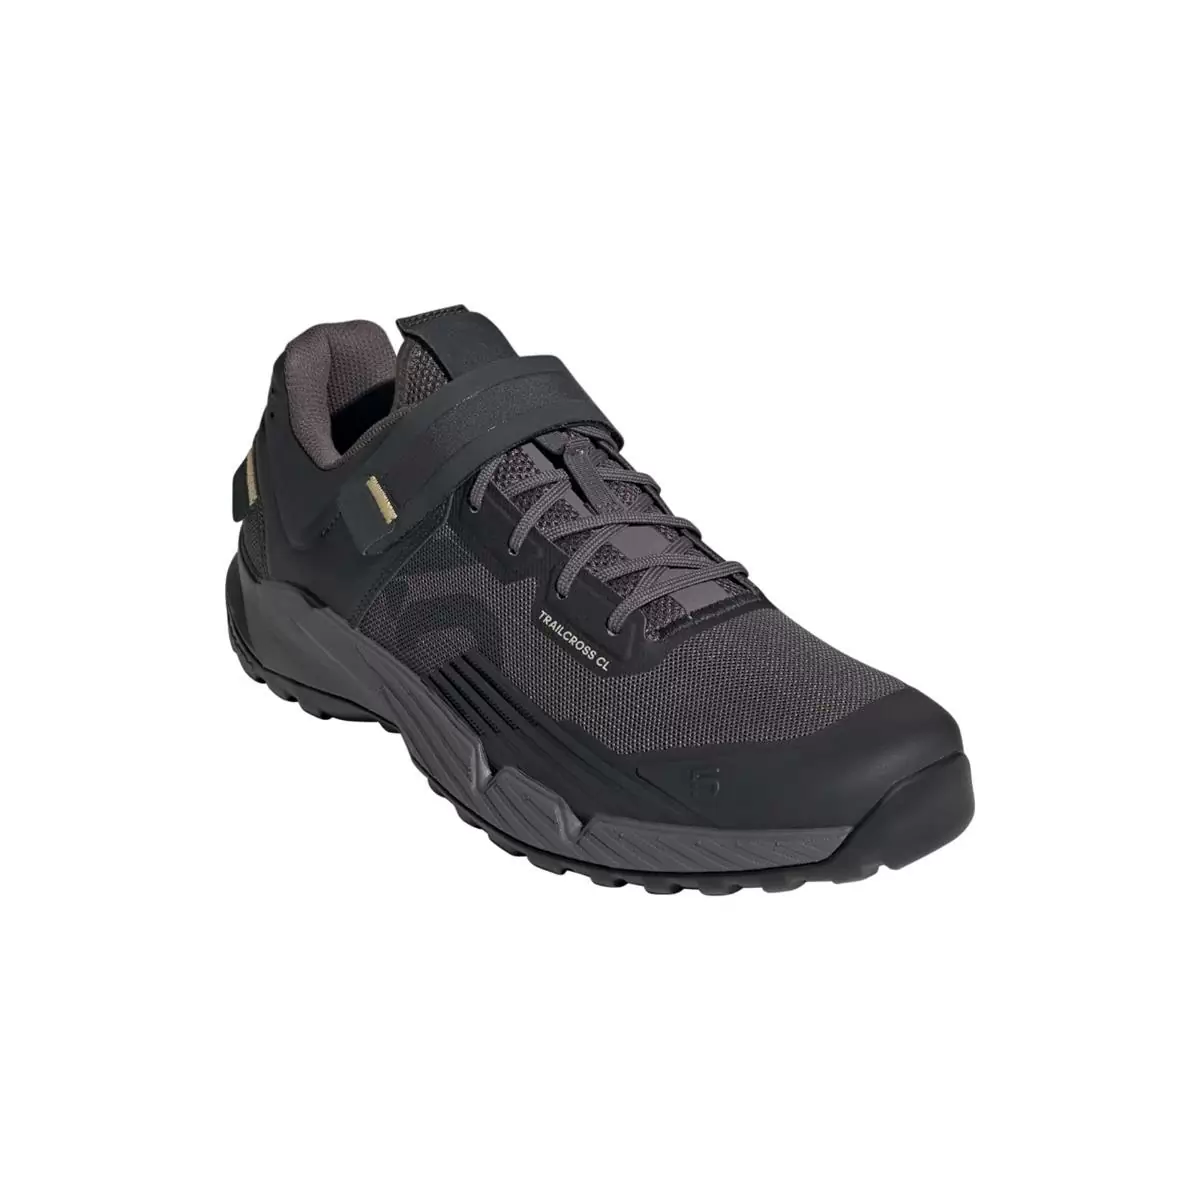 Clip 5.10 Trailcross MTB-Schuhe, Schwarz/Grau/Beige, Größe 38,5 #4